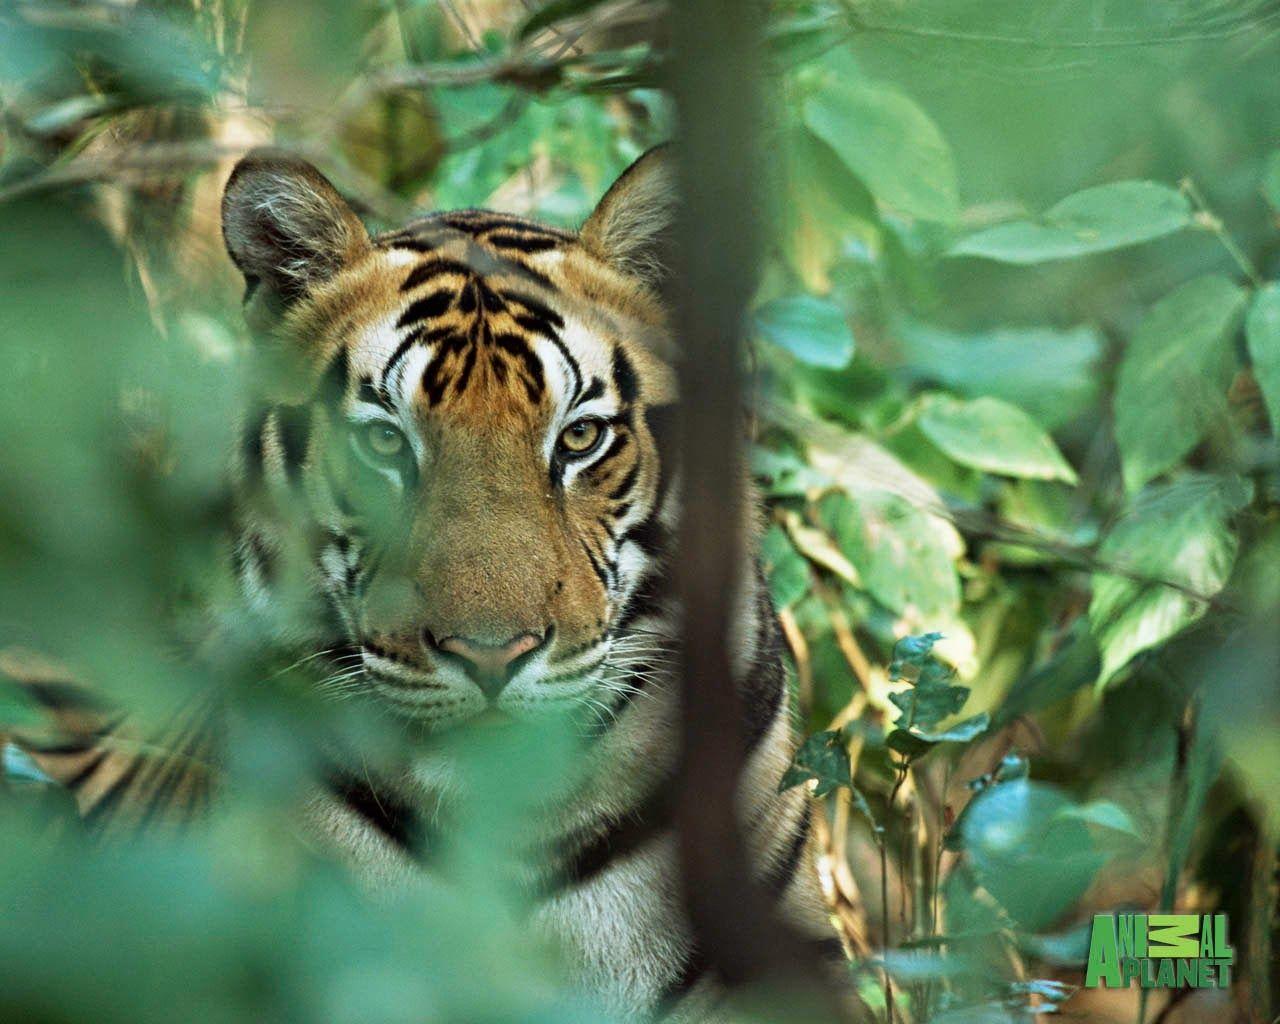 animal planet picture: Animal Planet Wallpaper Download Tiger